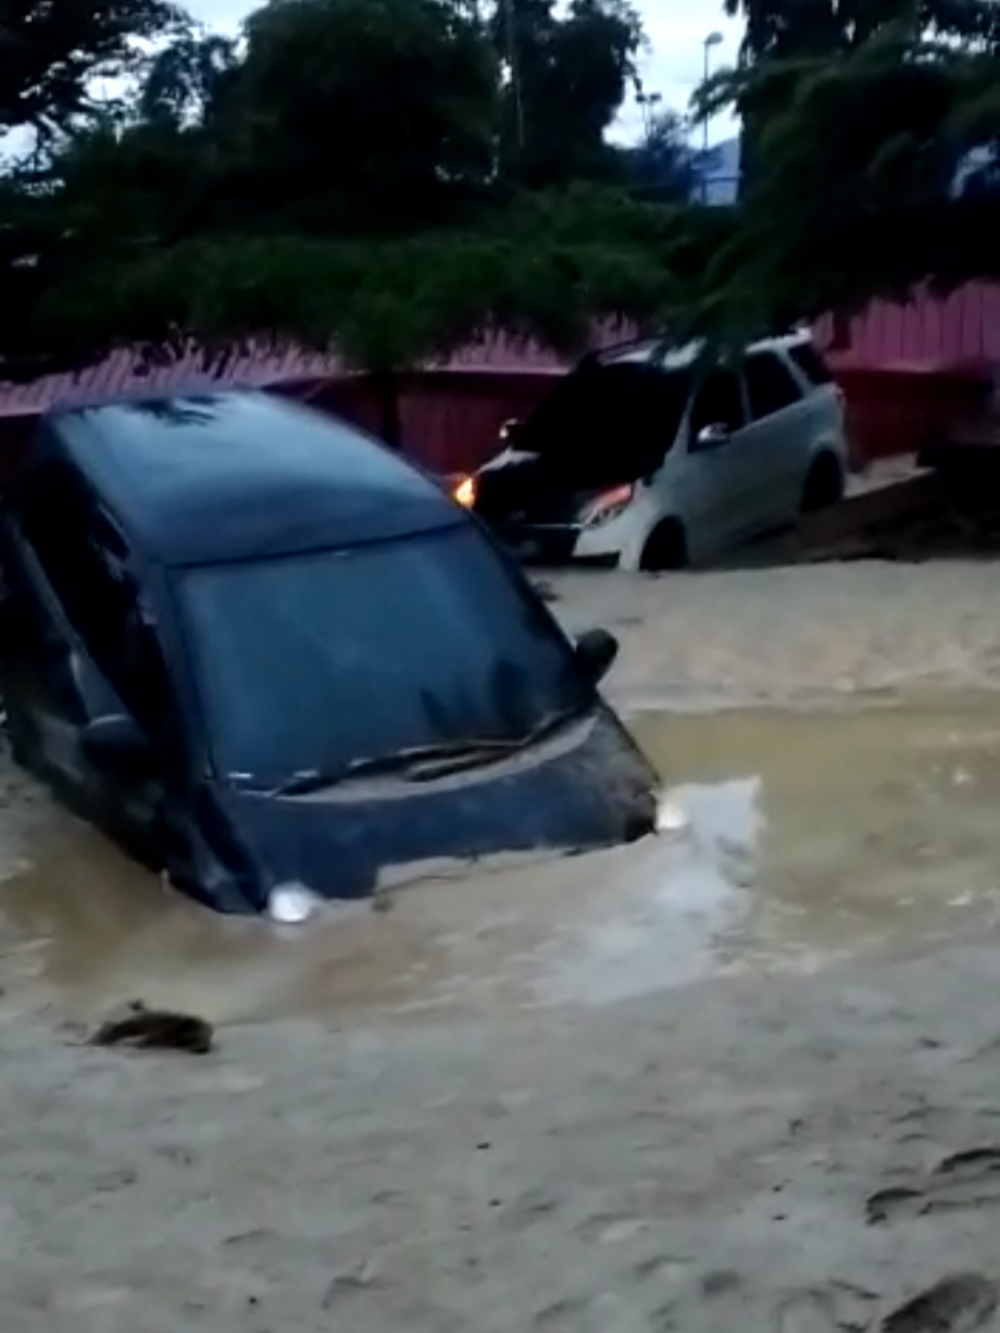 4.930 Keluarga Terdampak Banjir Bandang di Masamba Luwu Utara